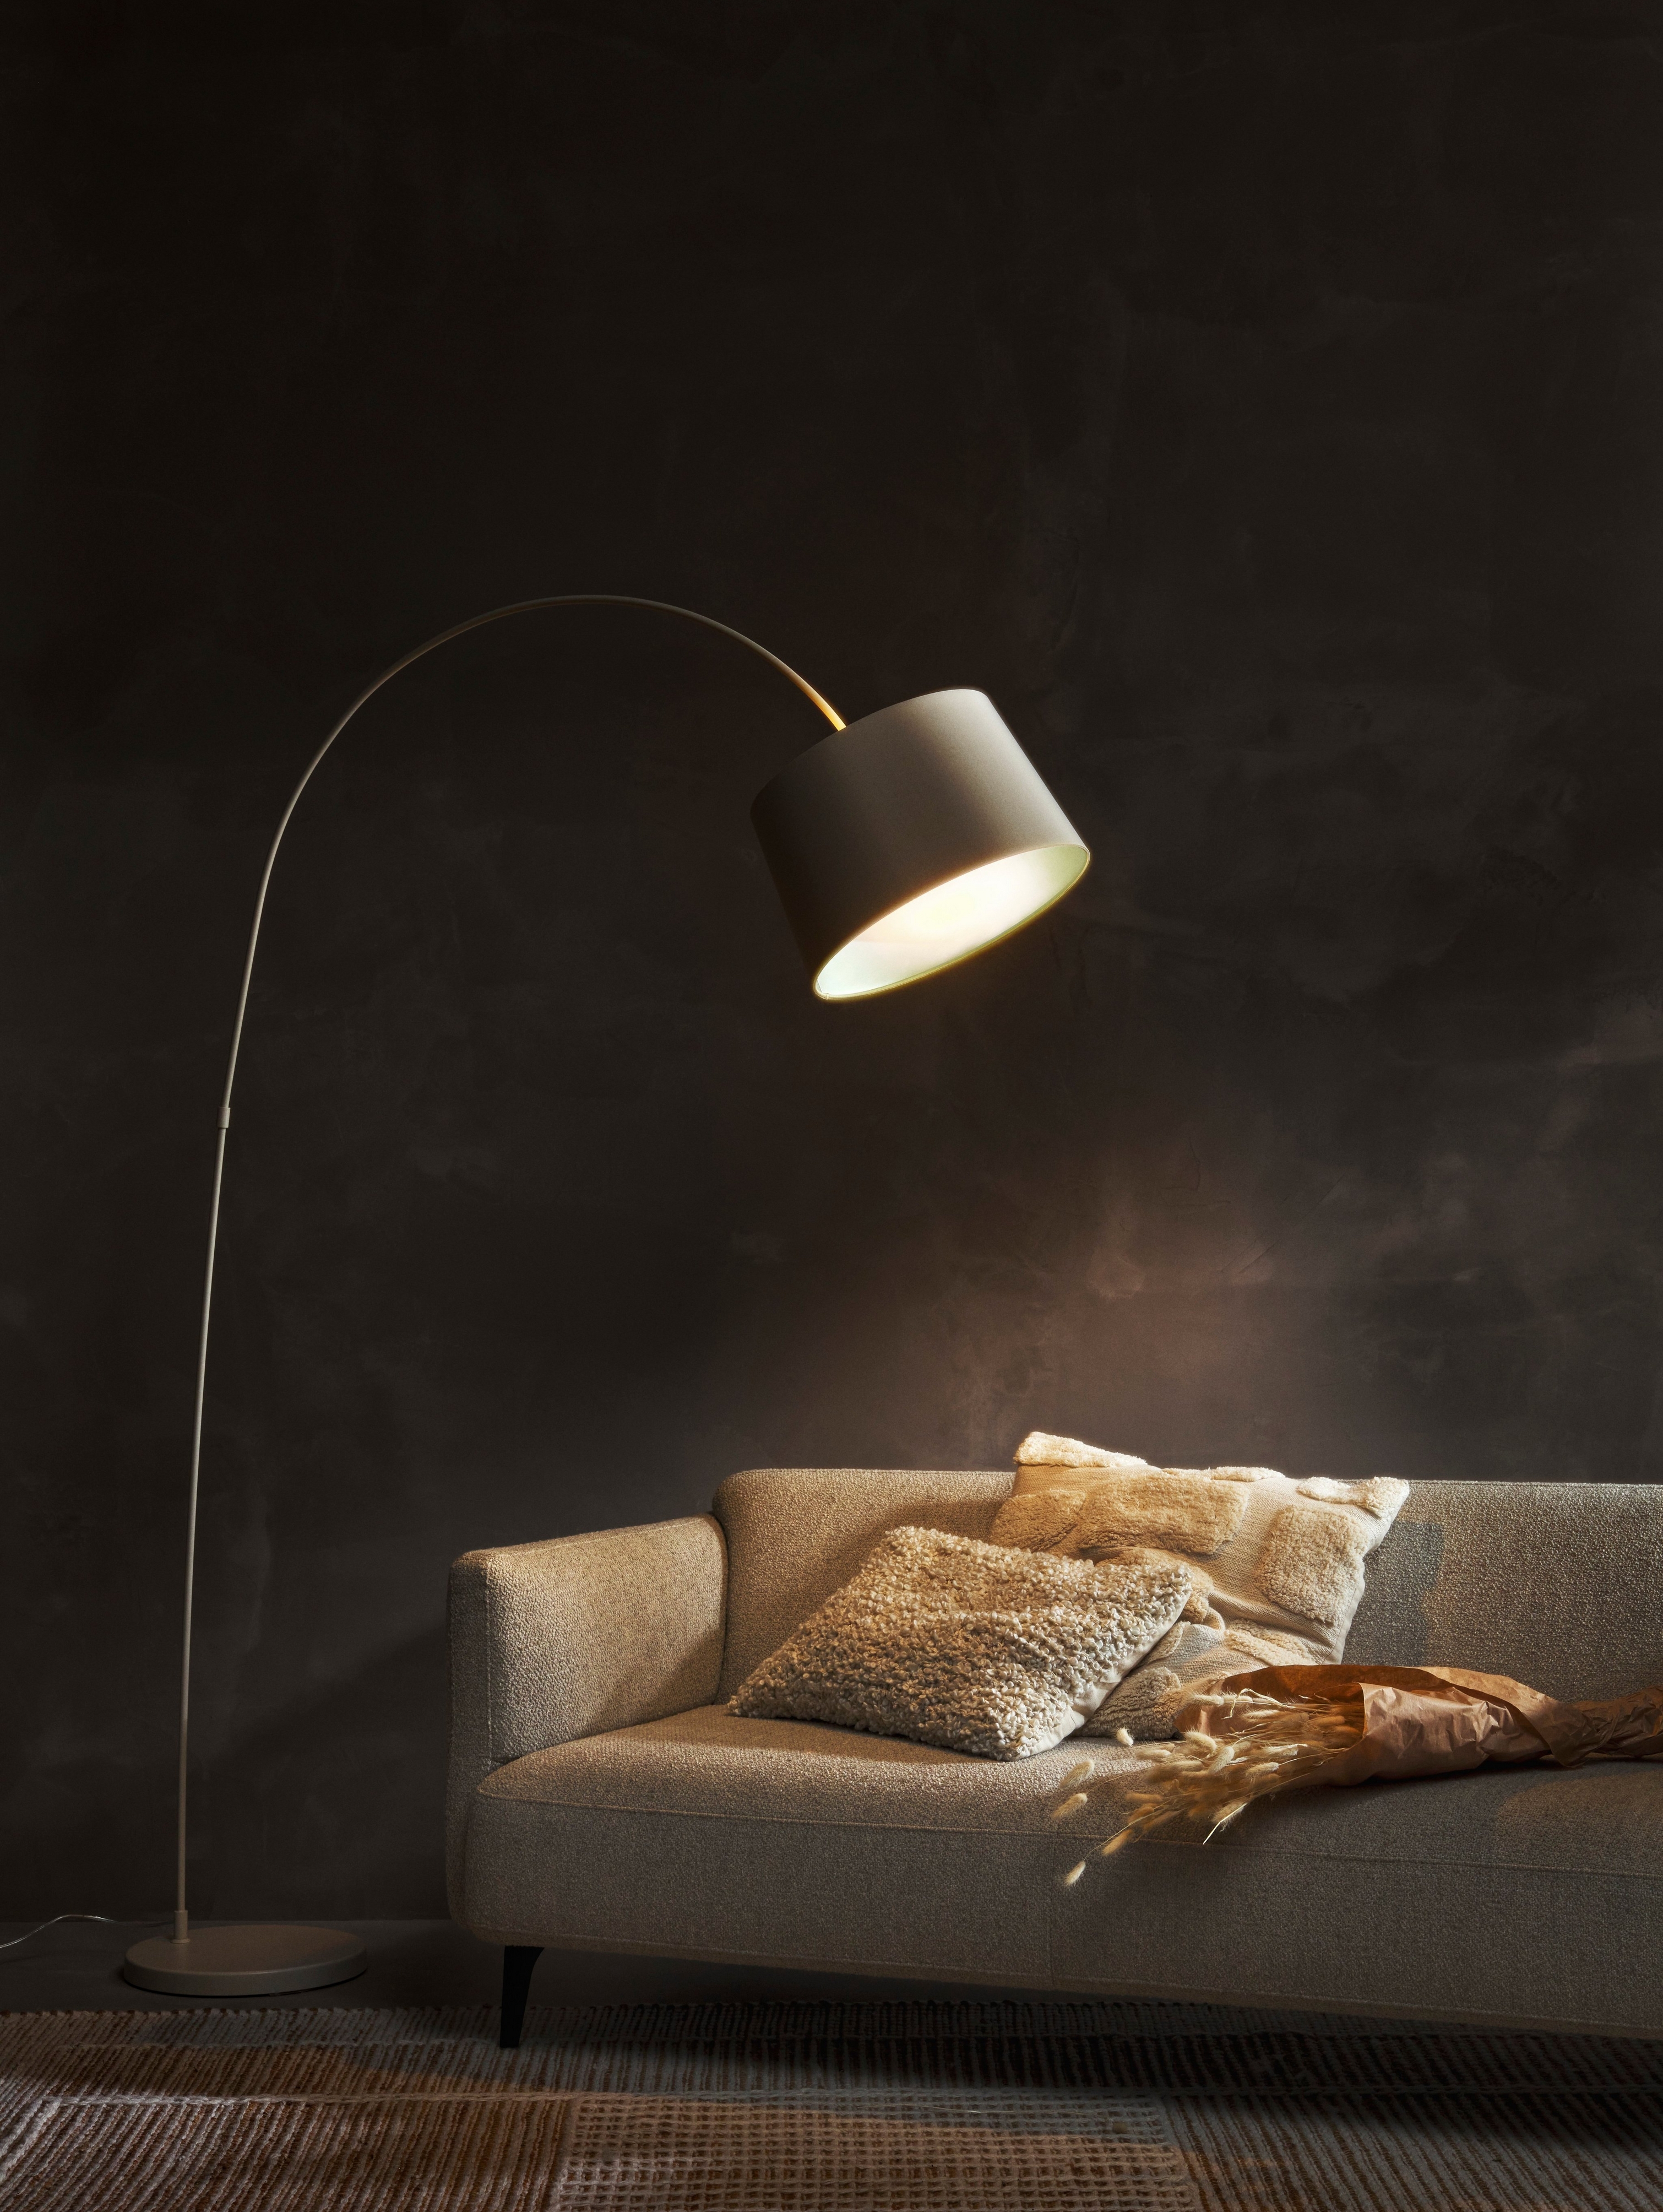 Kuta floor lamp illuminating a gray Modena sofa with pillows and a dark wall background